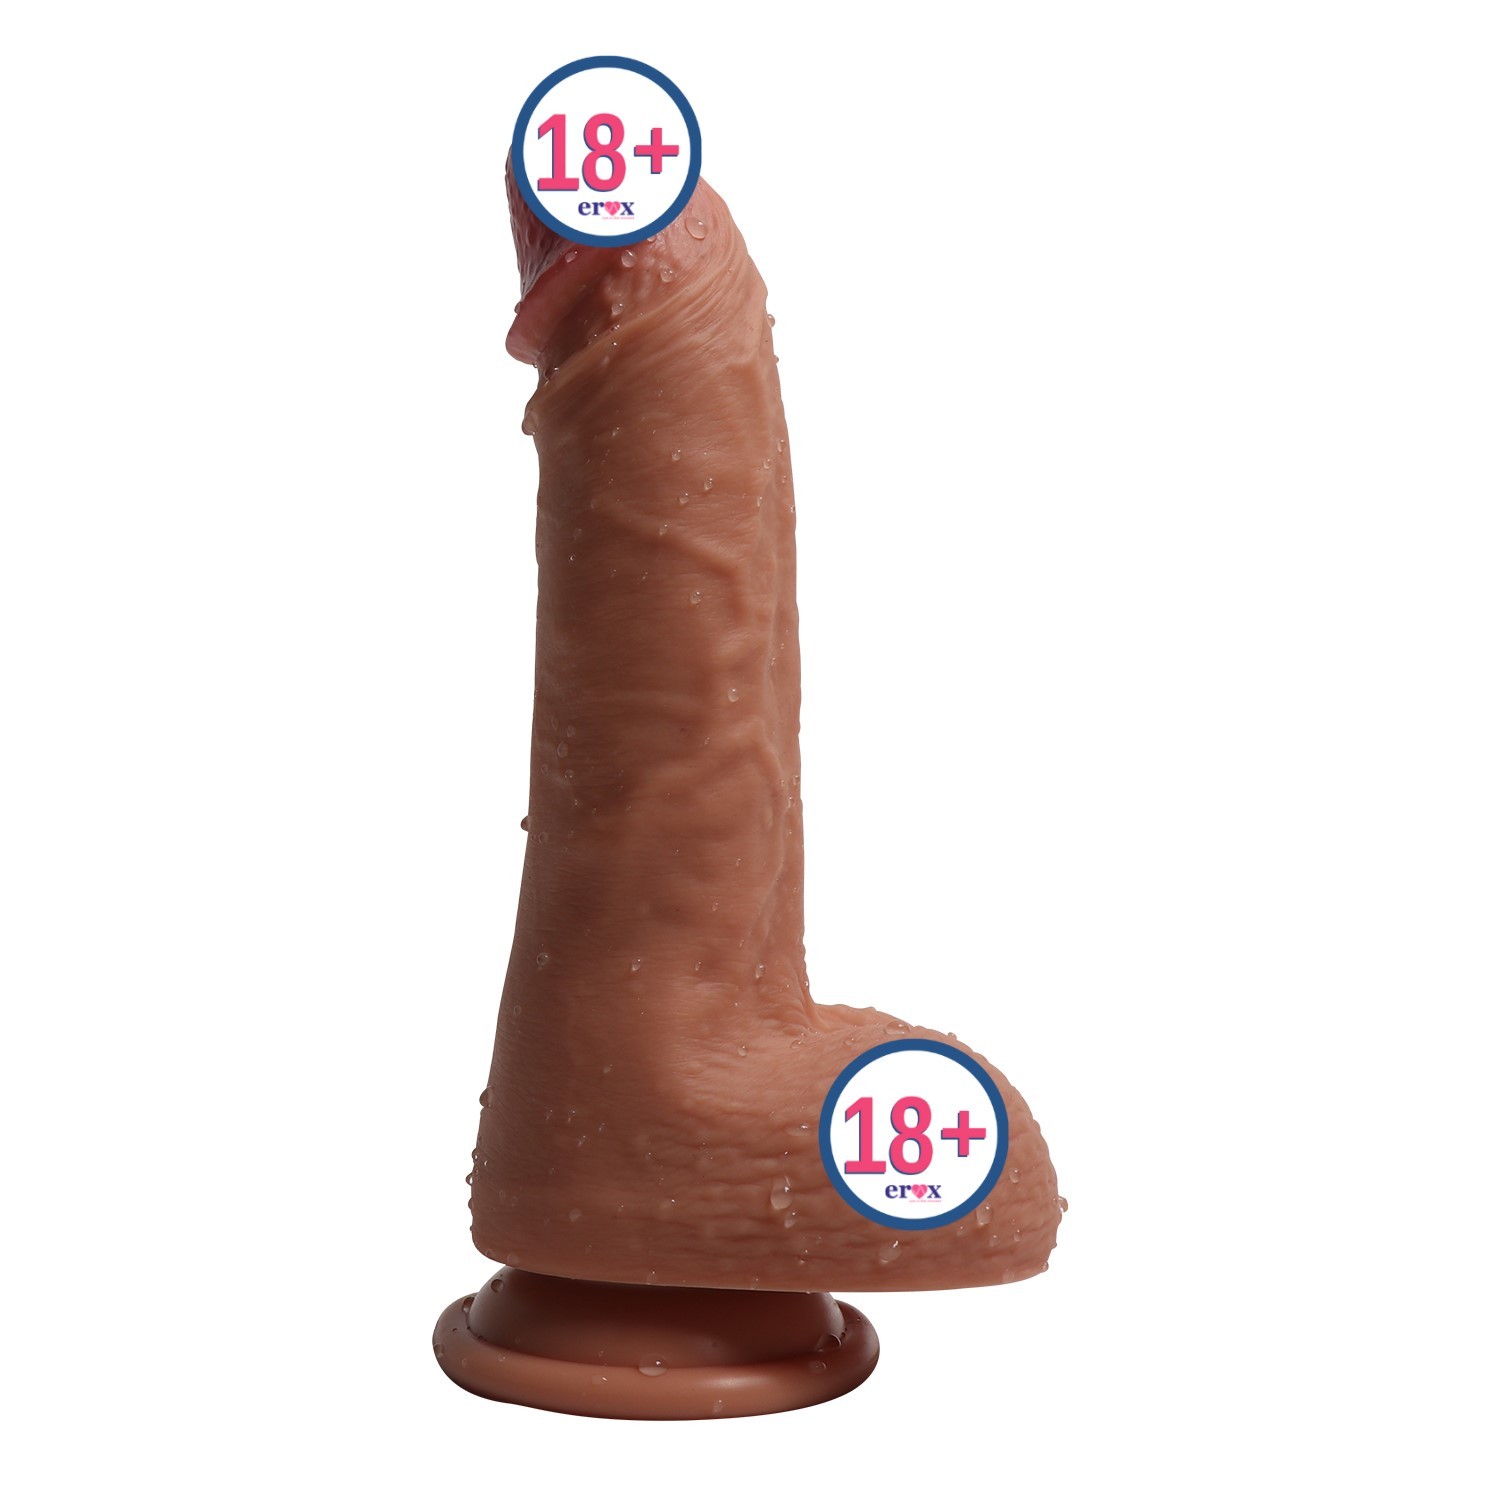 Shequ Ercules 22 cm  Et Dokulu Realistik Penis